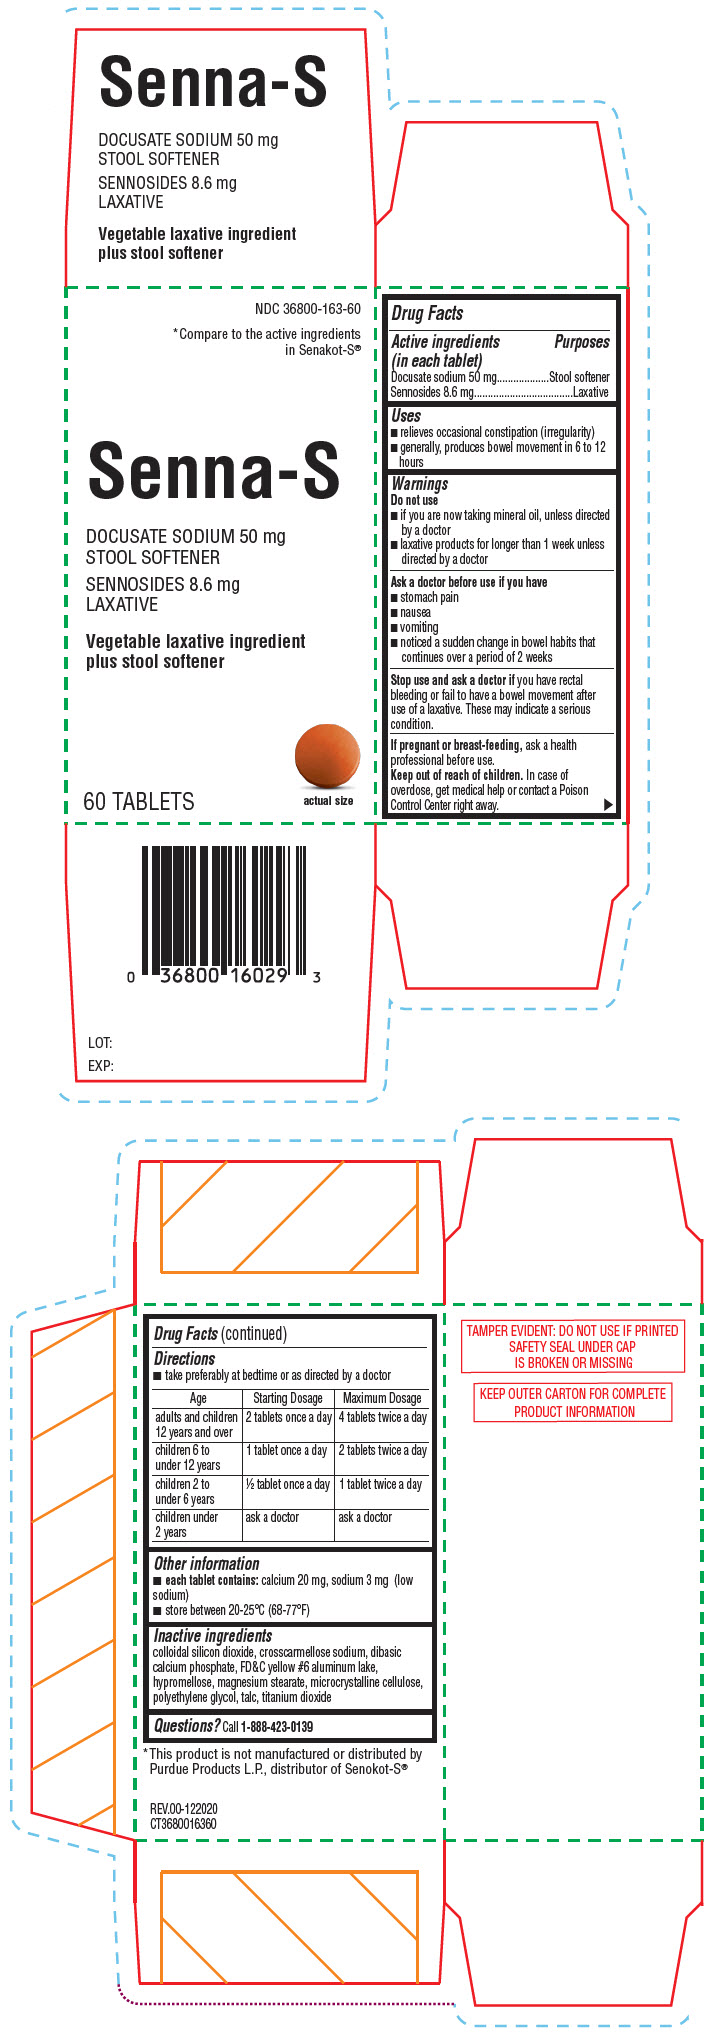 PRINCIPAL DISPLAY PANEL - 60 Tablet Bottle Carton